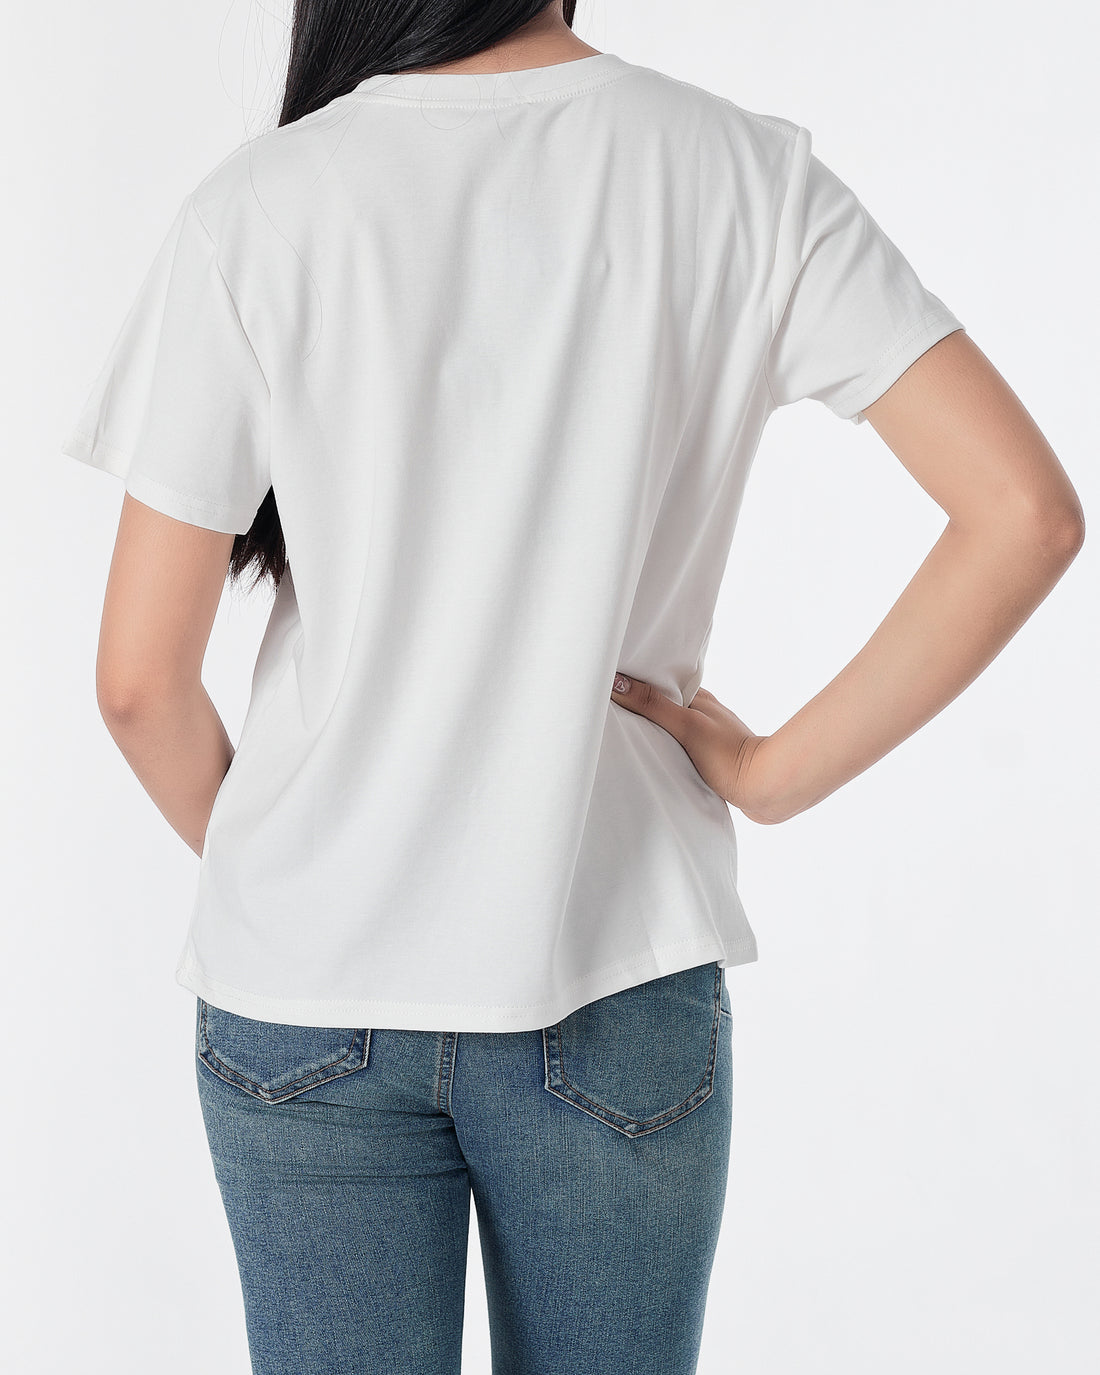 MIU Rhinestone Dripping Chain Lady White T-Shirt 28.90